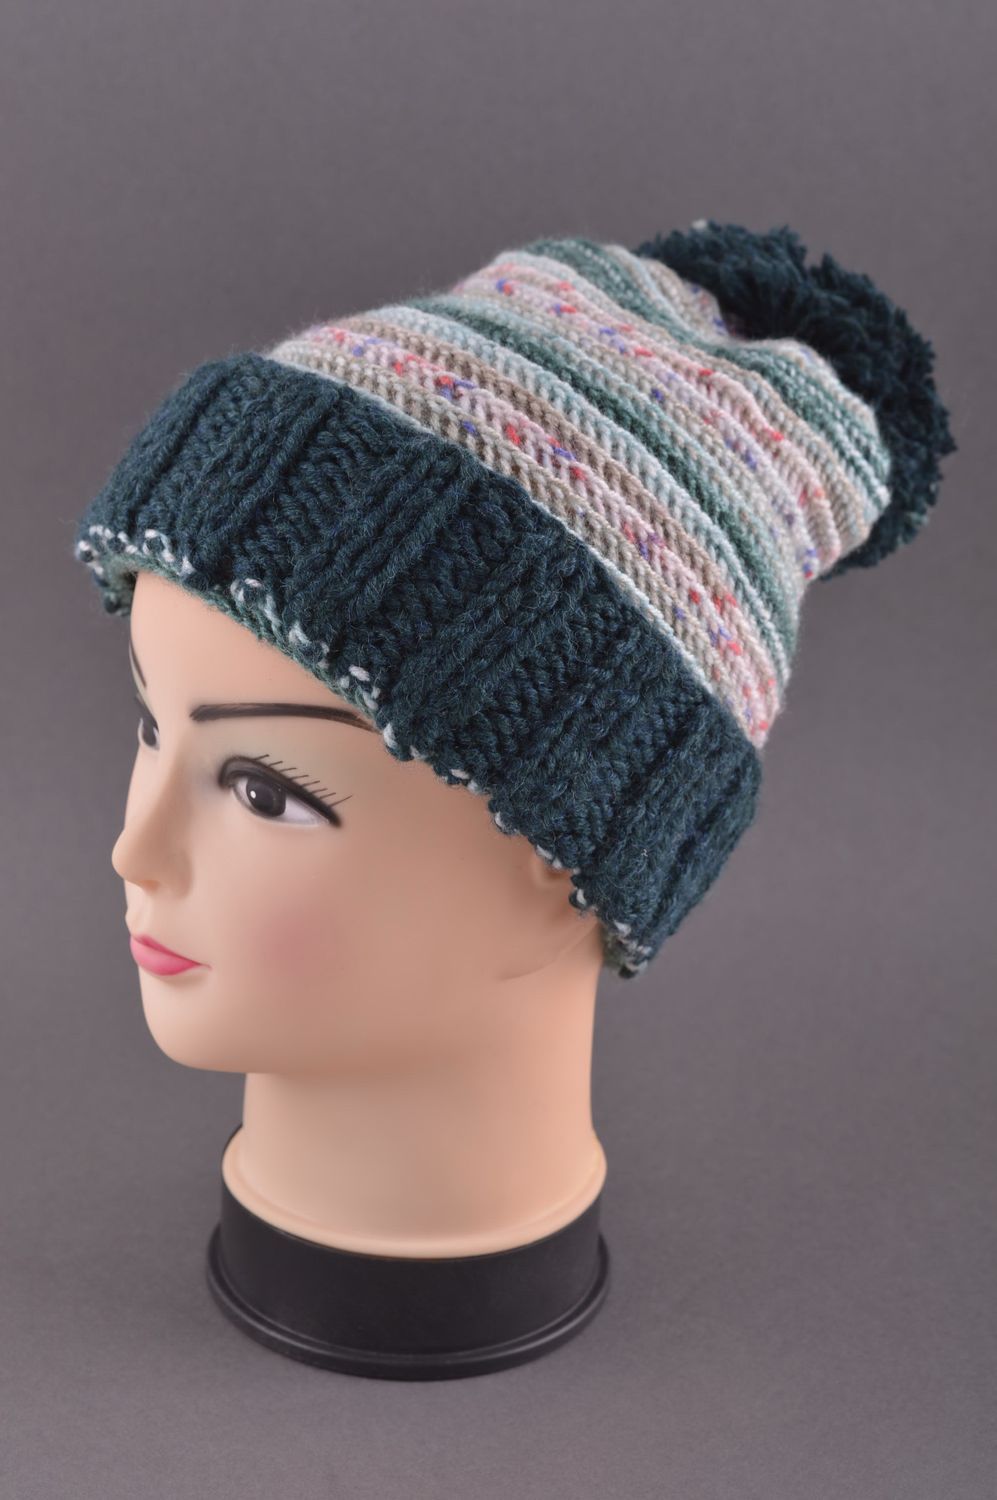 Handmade knitted hat designer hat for women winter accessories for girls photo 1